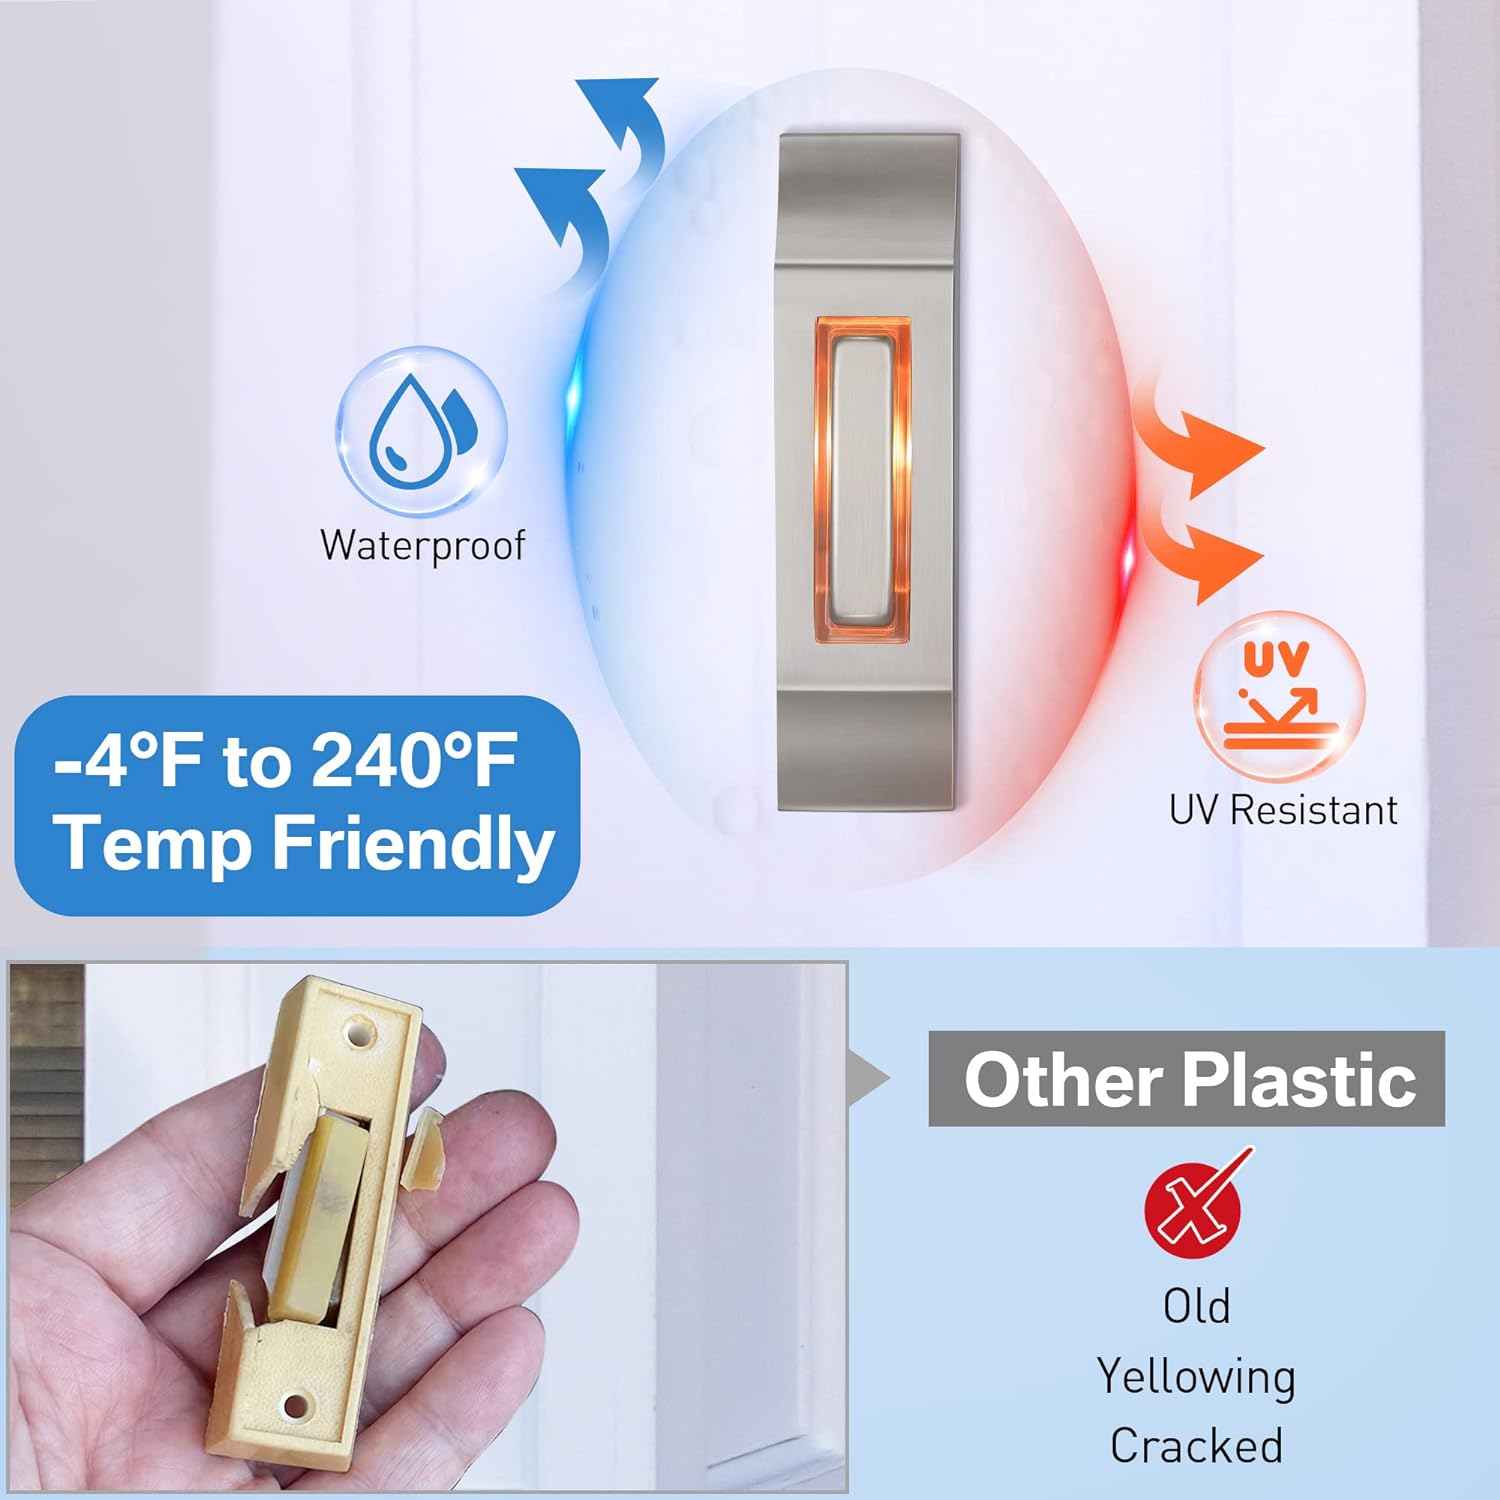 Enhon Solid Nickel Doorbell Button,Sleek Metal LED Light Up Wall Mounted Door Bell Push Buttons for Home, Universal Garage Door Opener Switch(Stylish Style, 1 Pack)